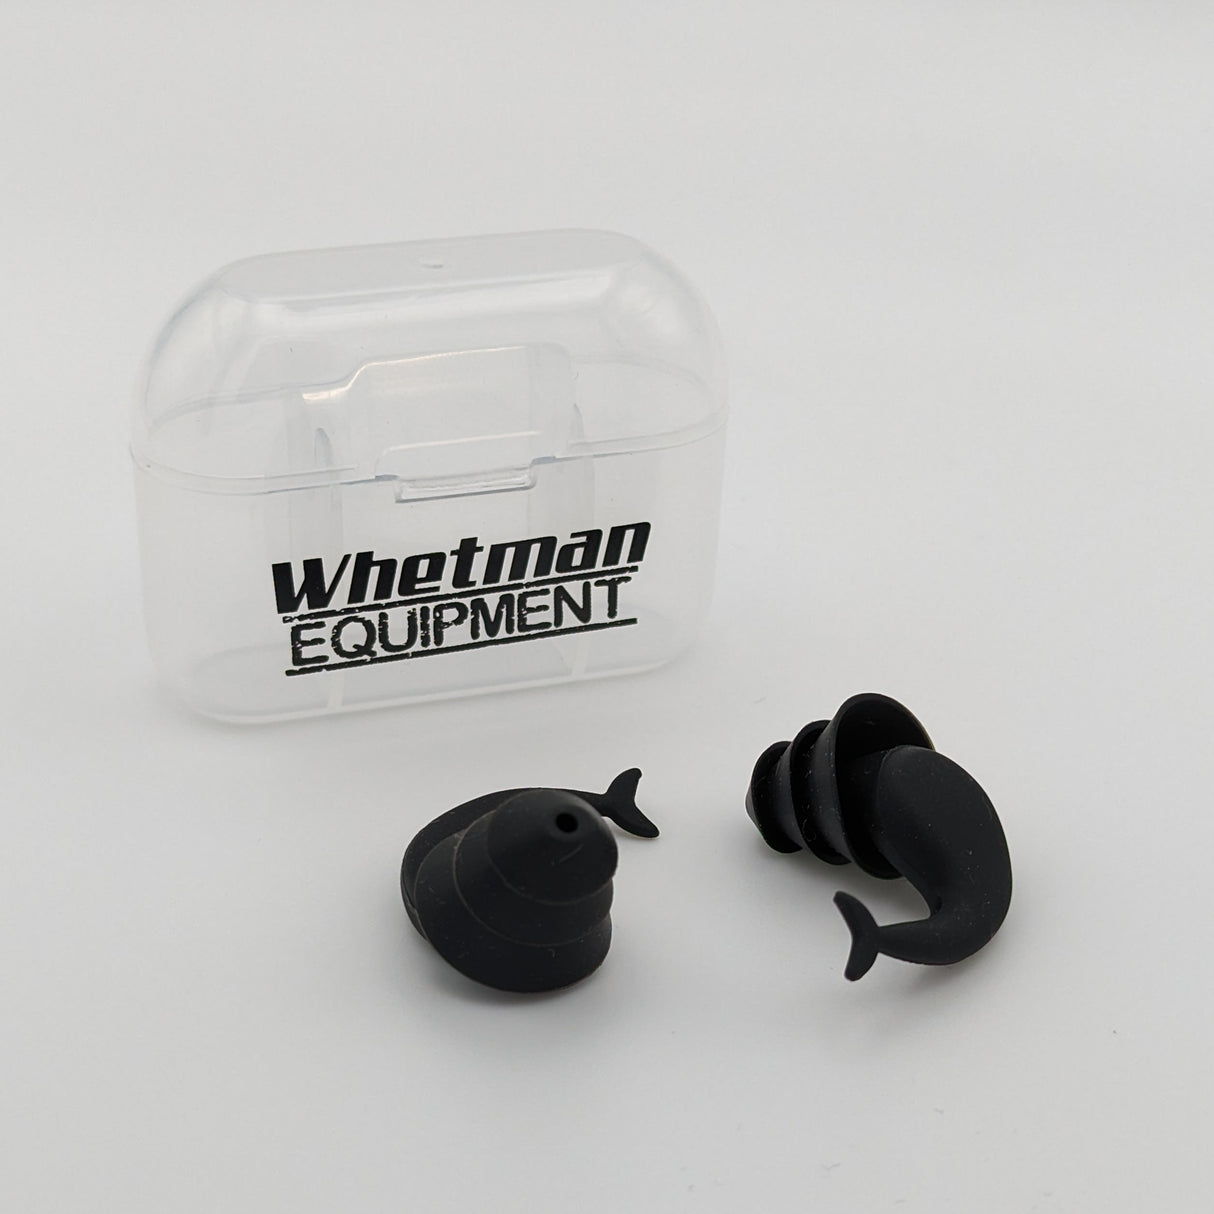 Whetman Equipment Fish Tail Ear Plug